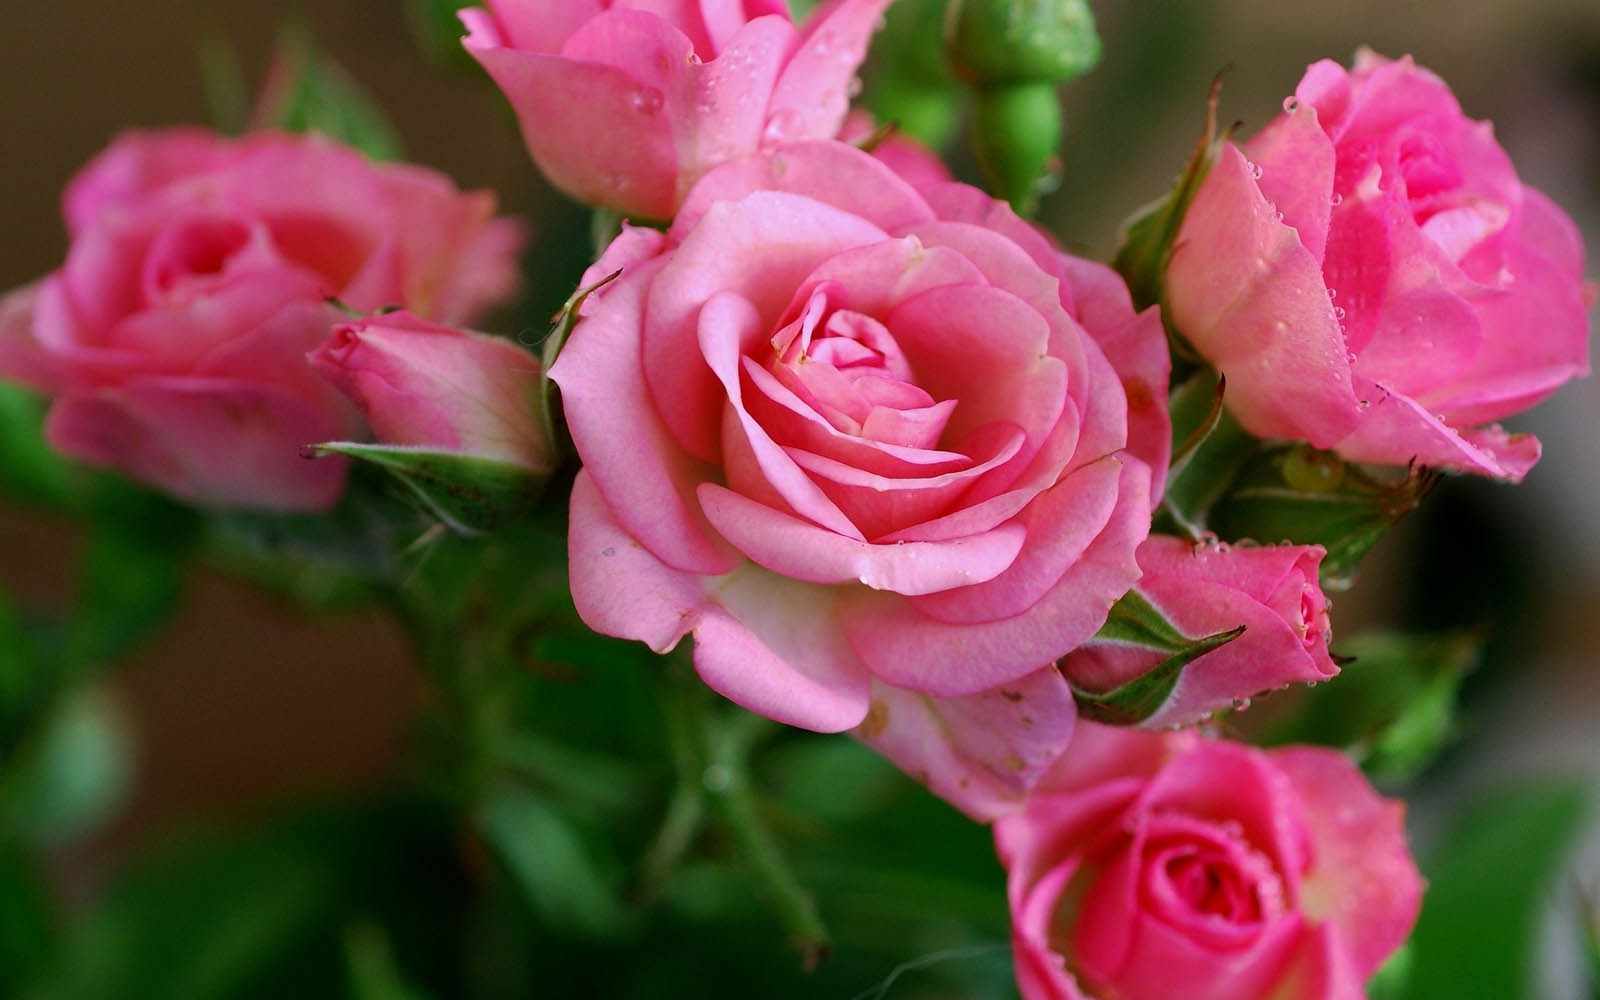 schöne rosa rosen tapeten kostenloser download,blume,blühende pflanze,gartenrosen,rosa,rose